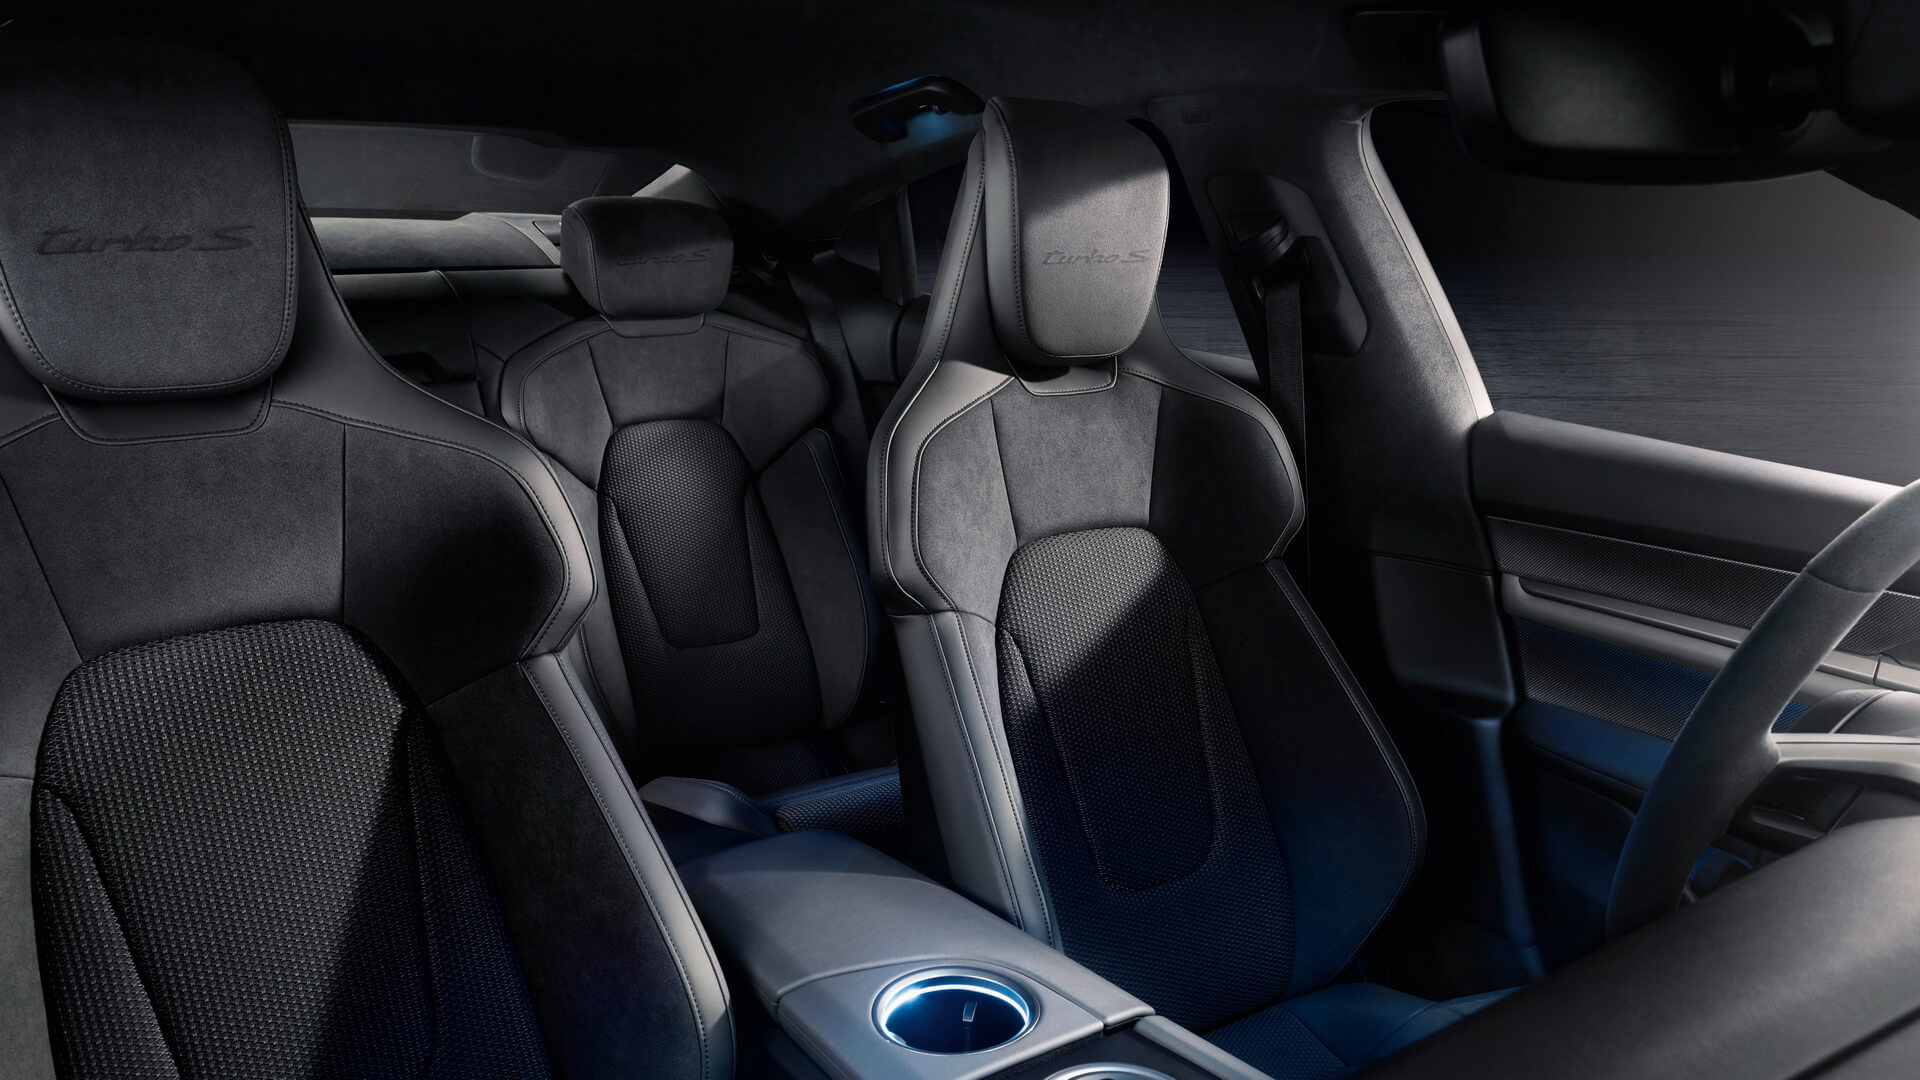 New 2022 Volkswagen Beetle Seat Covers, Upgrades, Performance Specs